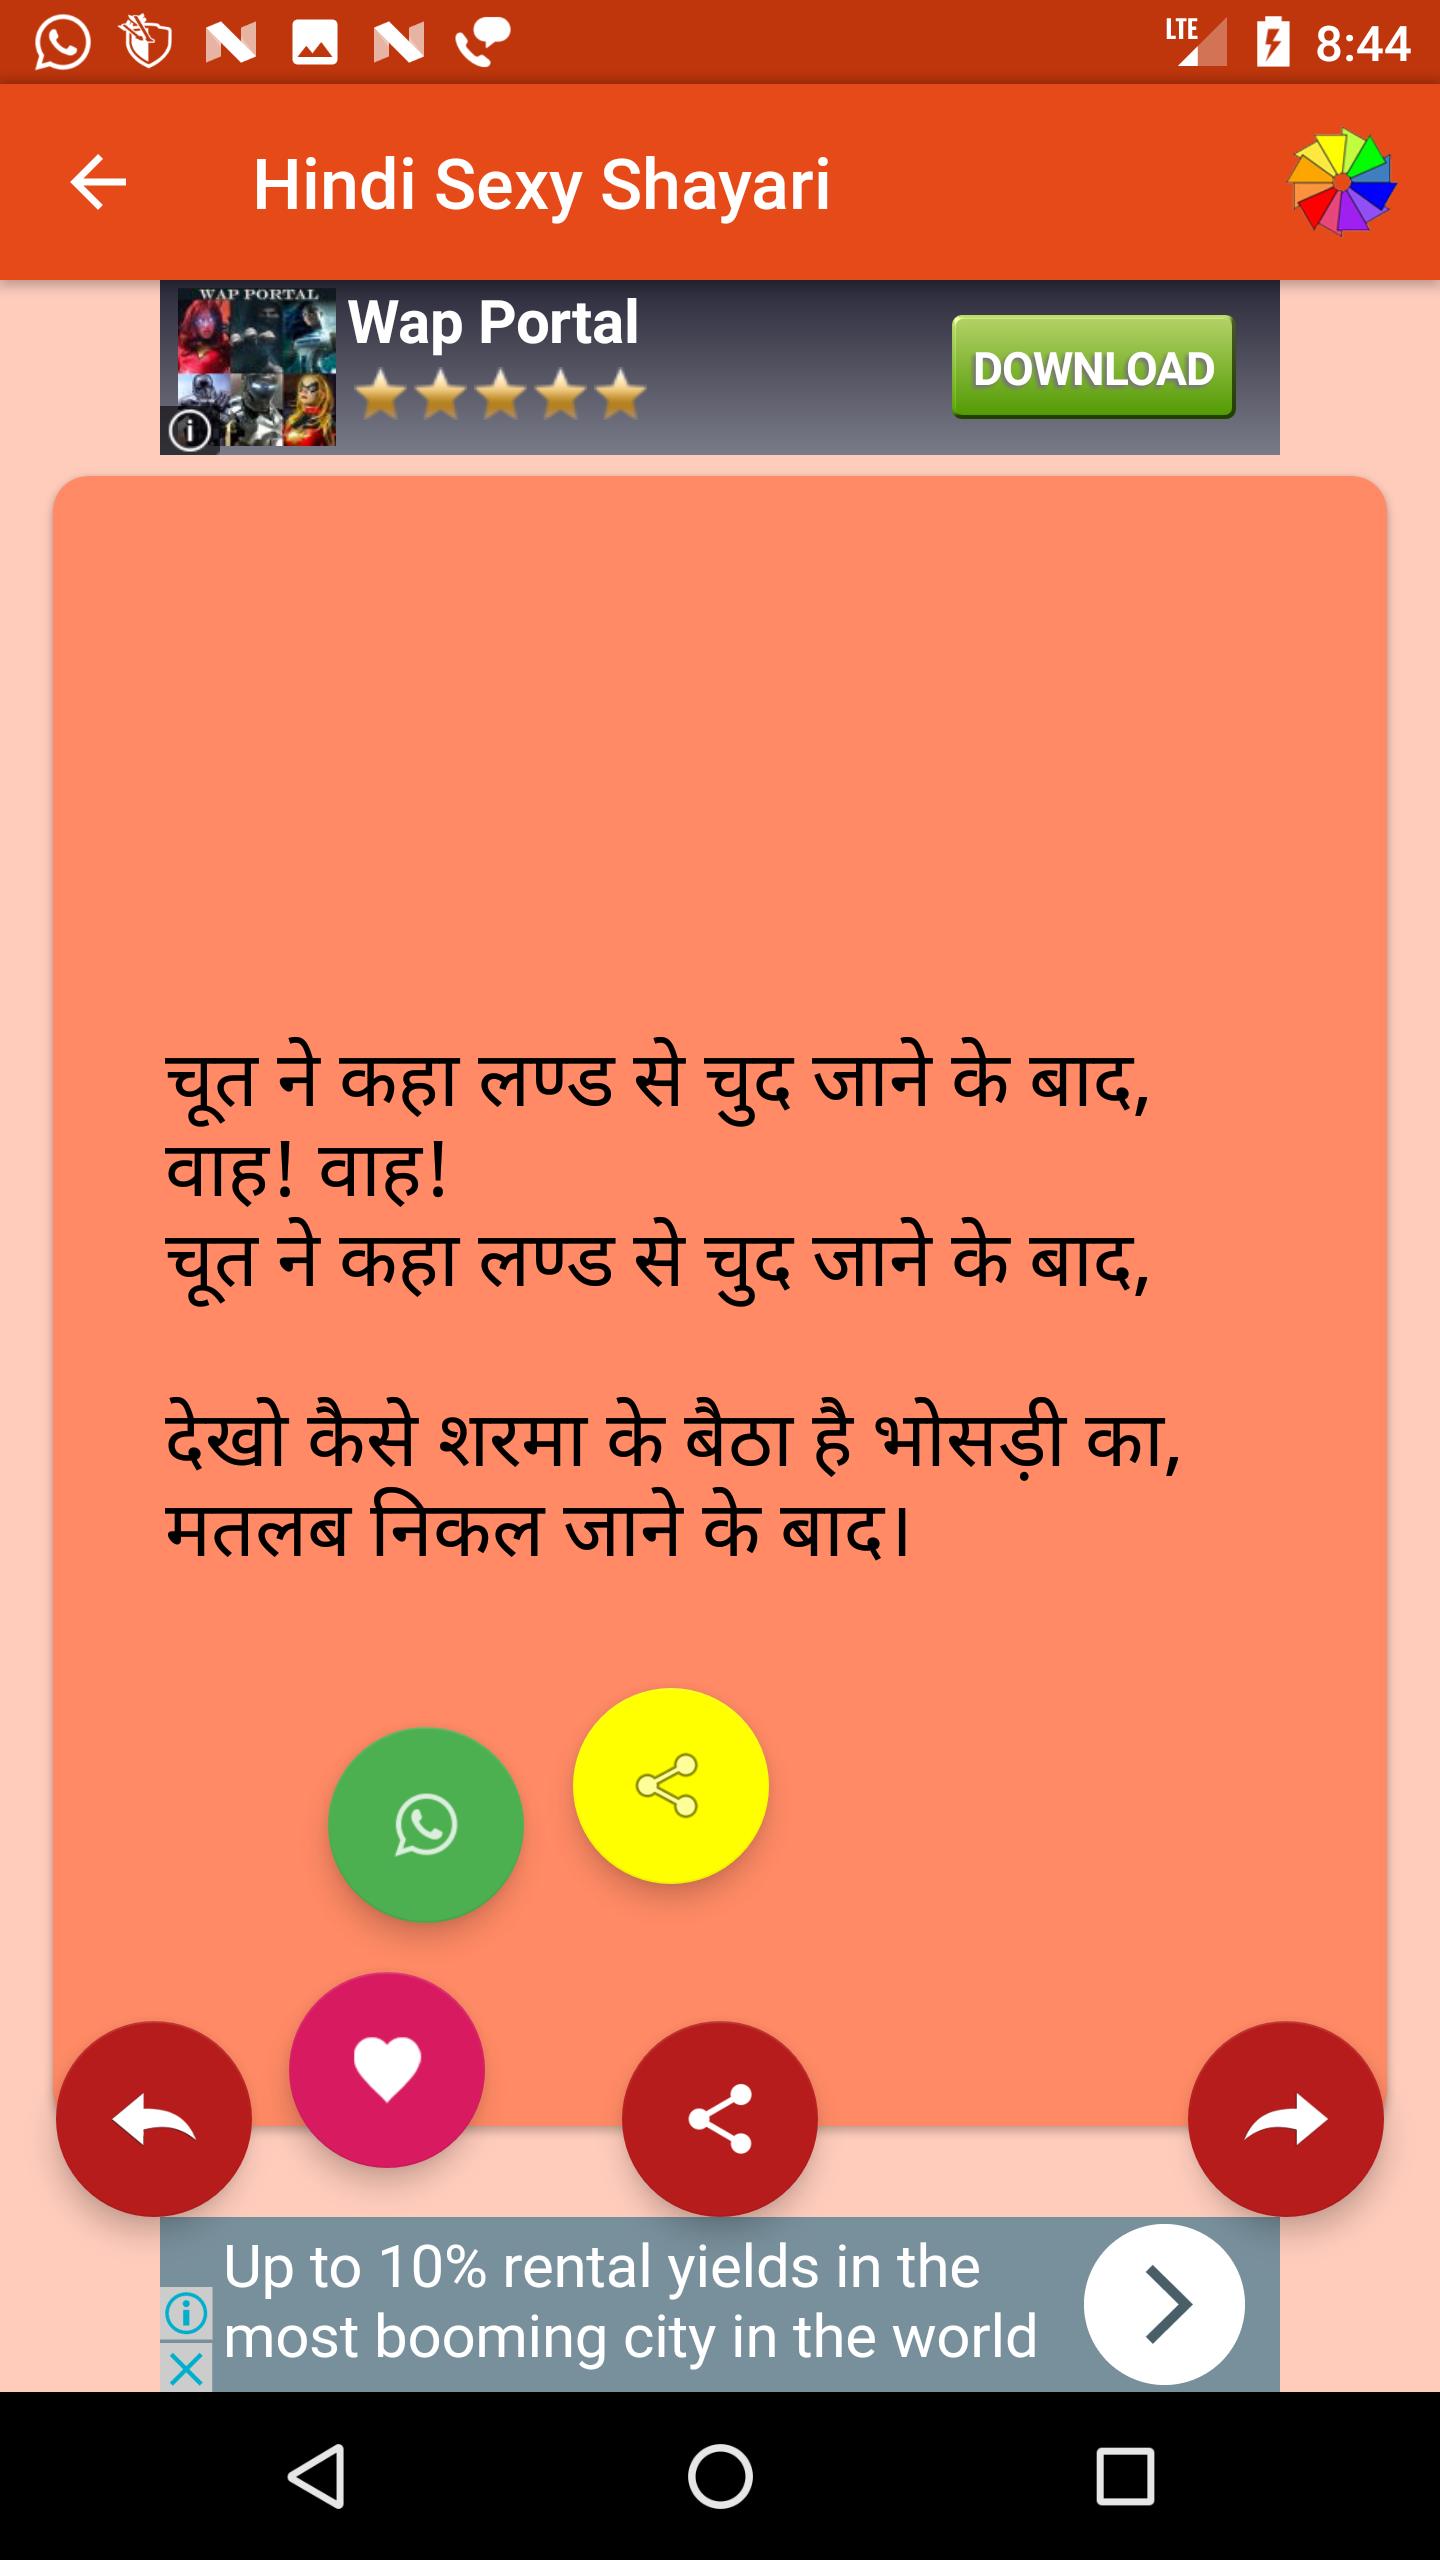 Desi Sexy Adult Hindi Shayari for Android - APK Download